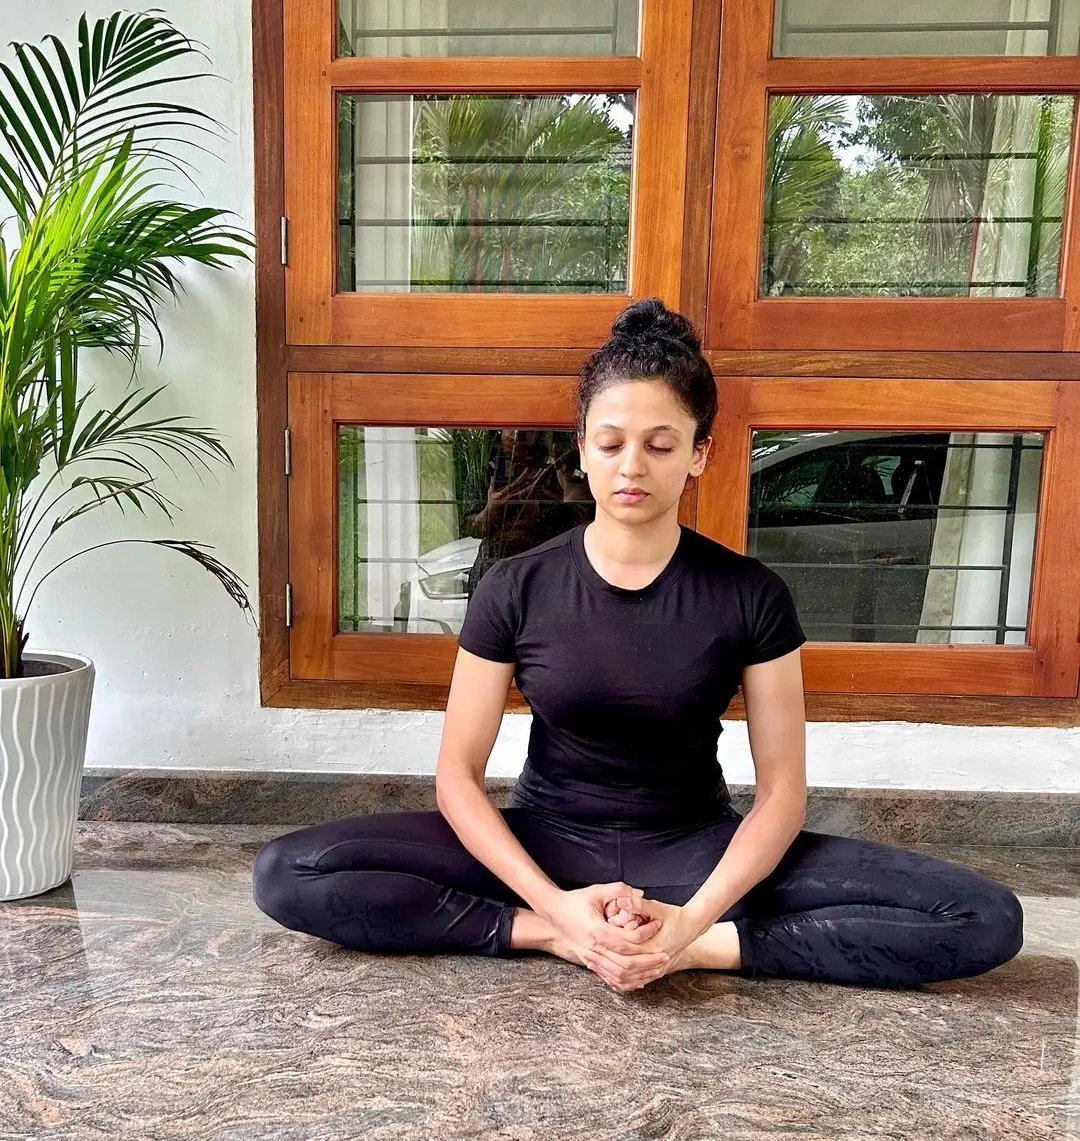 Neeta Pillai practicing yoga